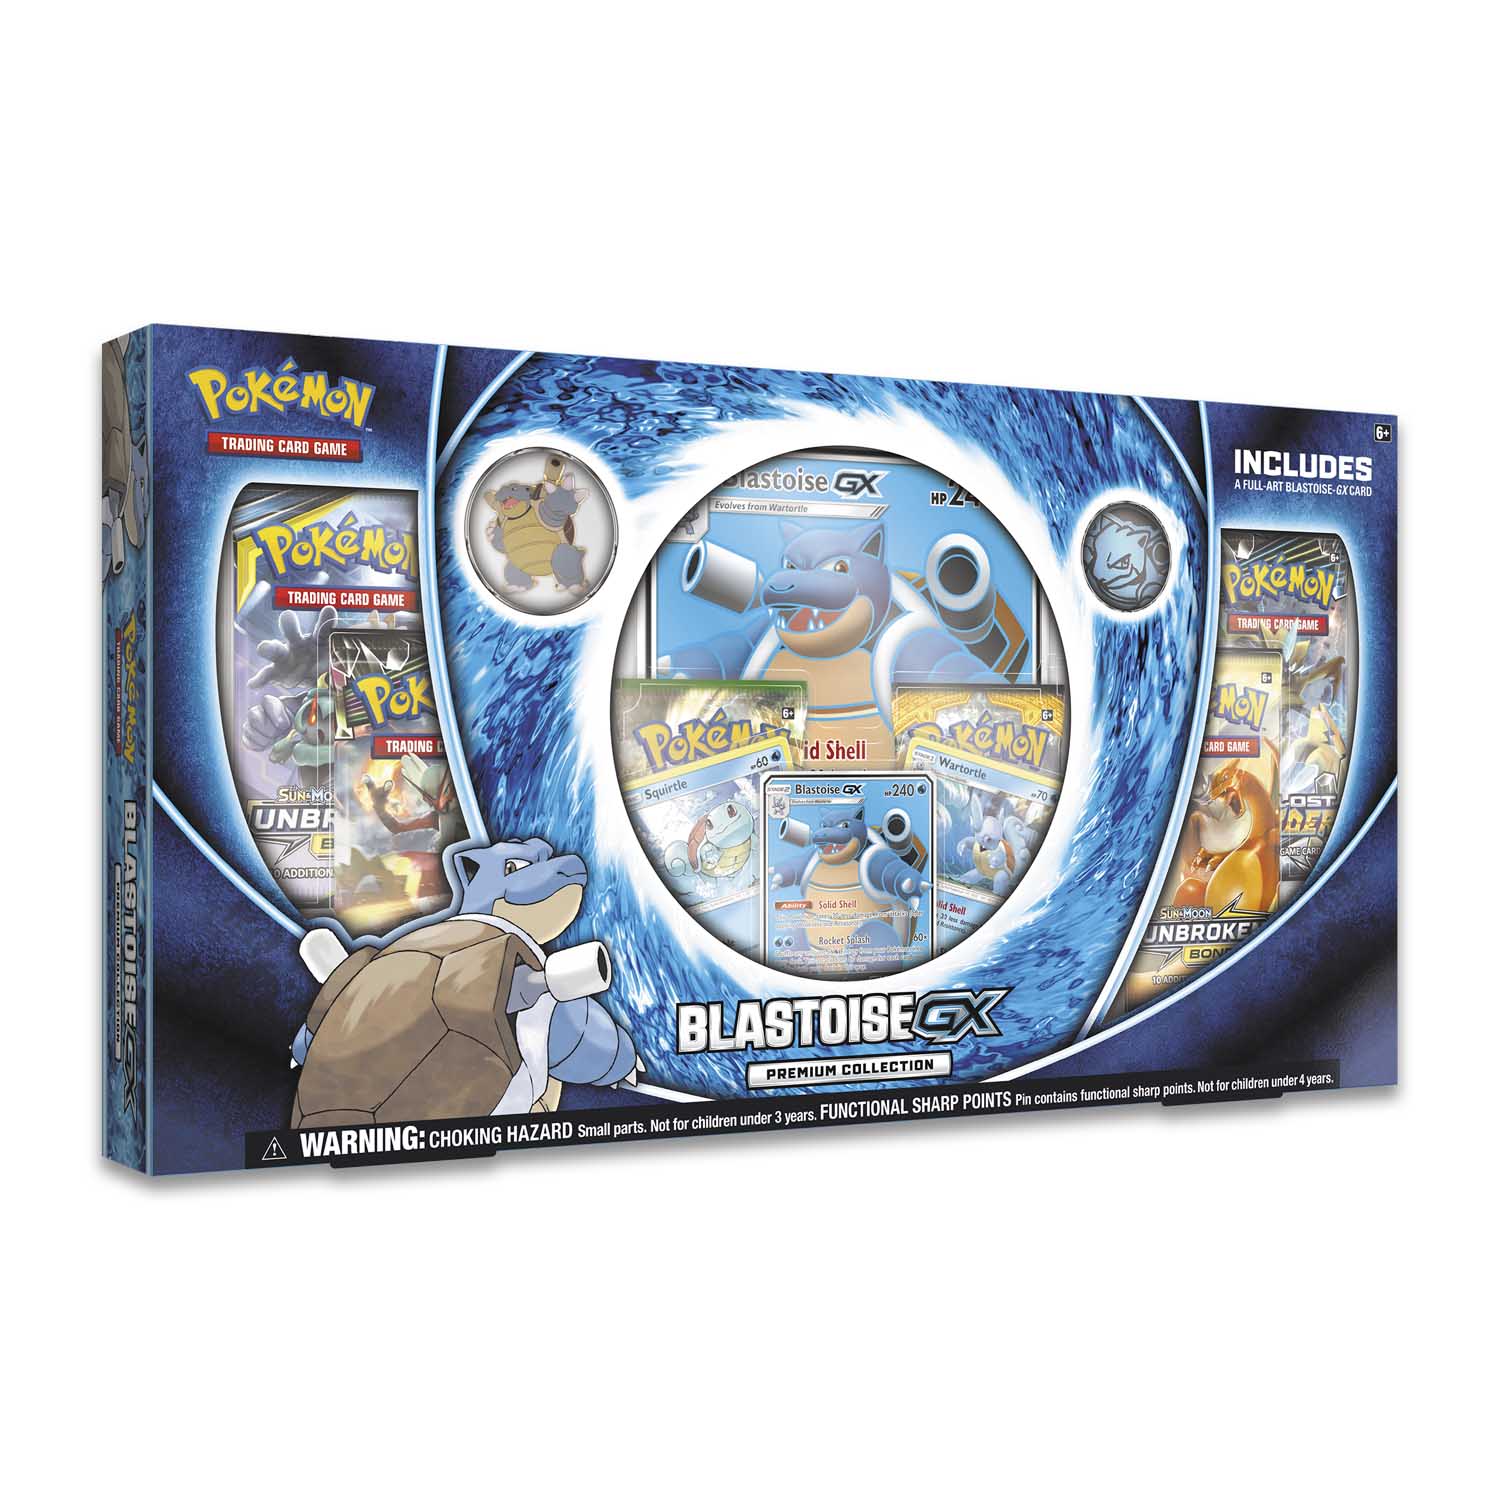 Pokemon Trading Card Game Blastoise GX Premium Collection Box New/Sealed